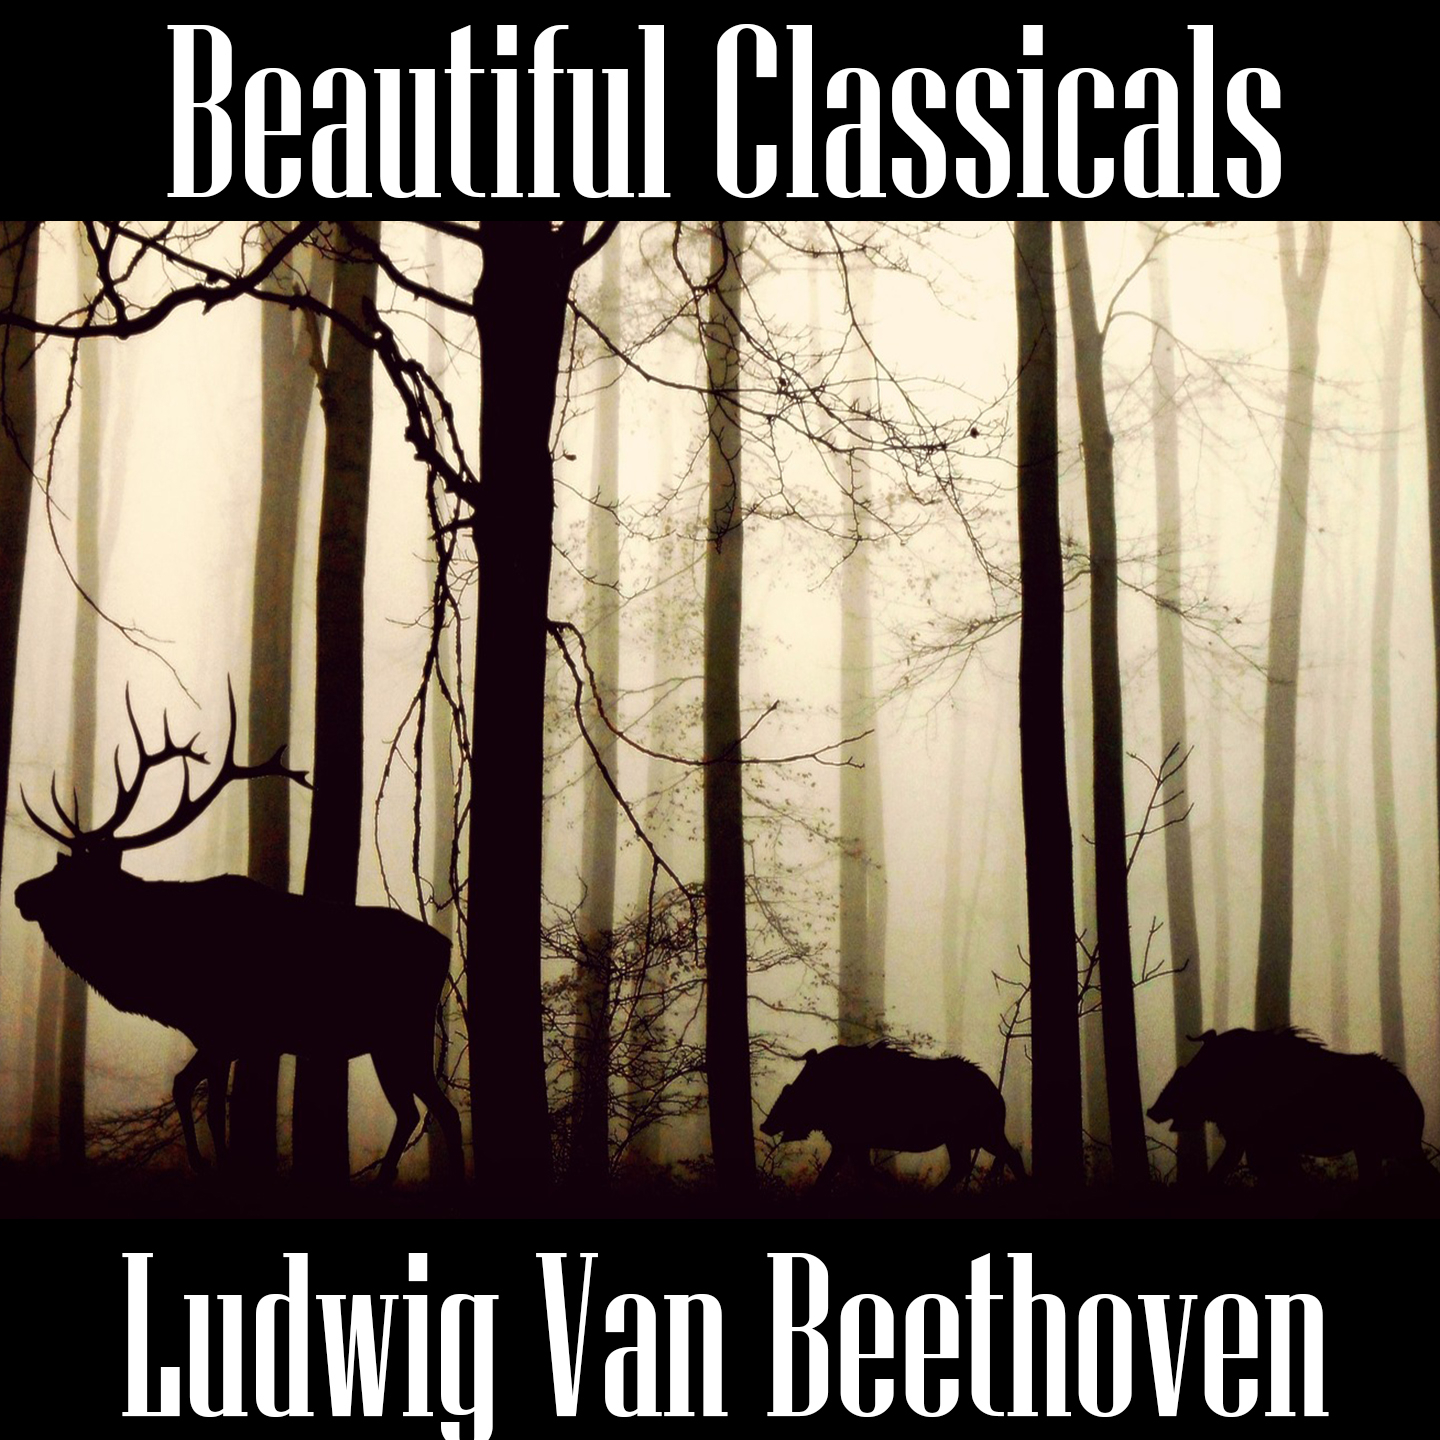 Beautiful Classicals: Ludwig van Beethoven